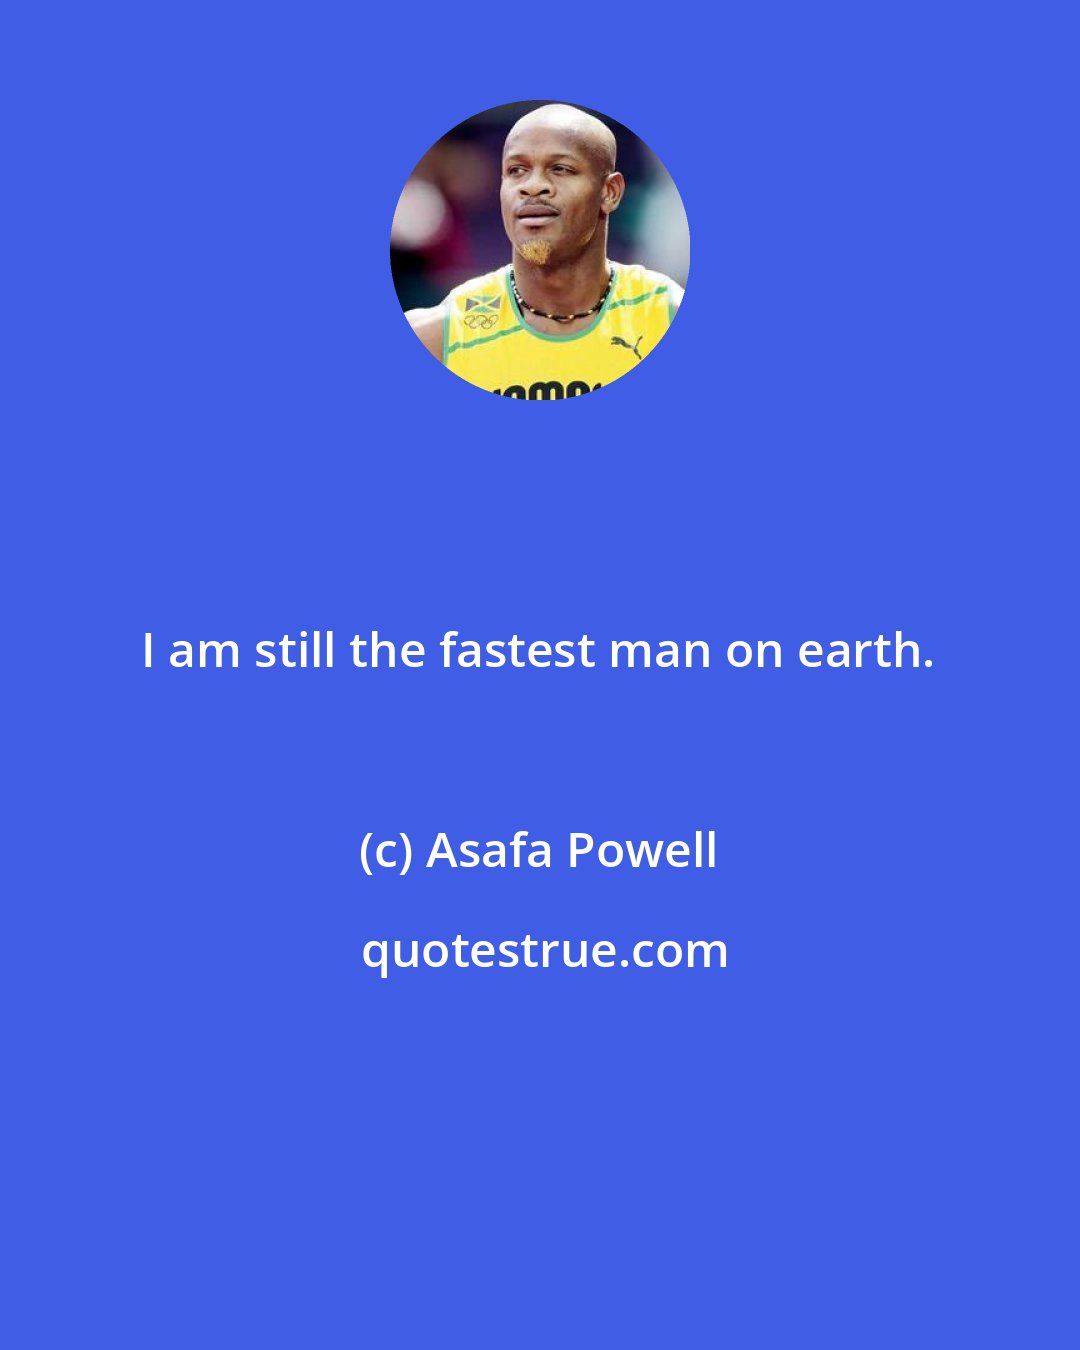 Asafa Powell: I am still the fastest man on earth.